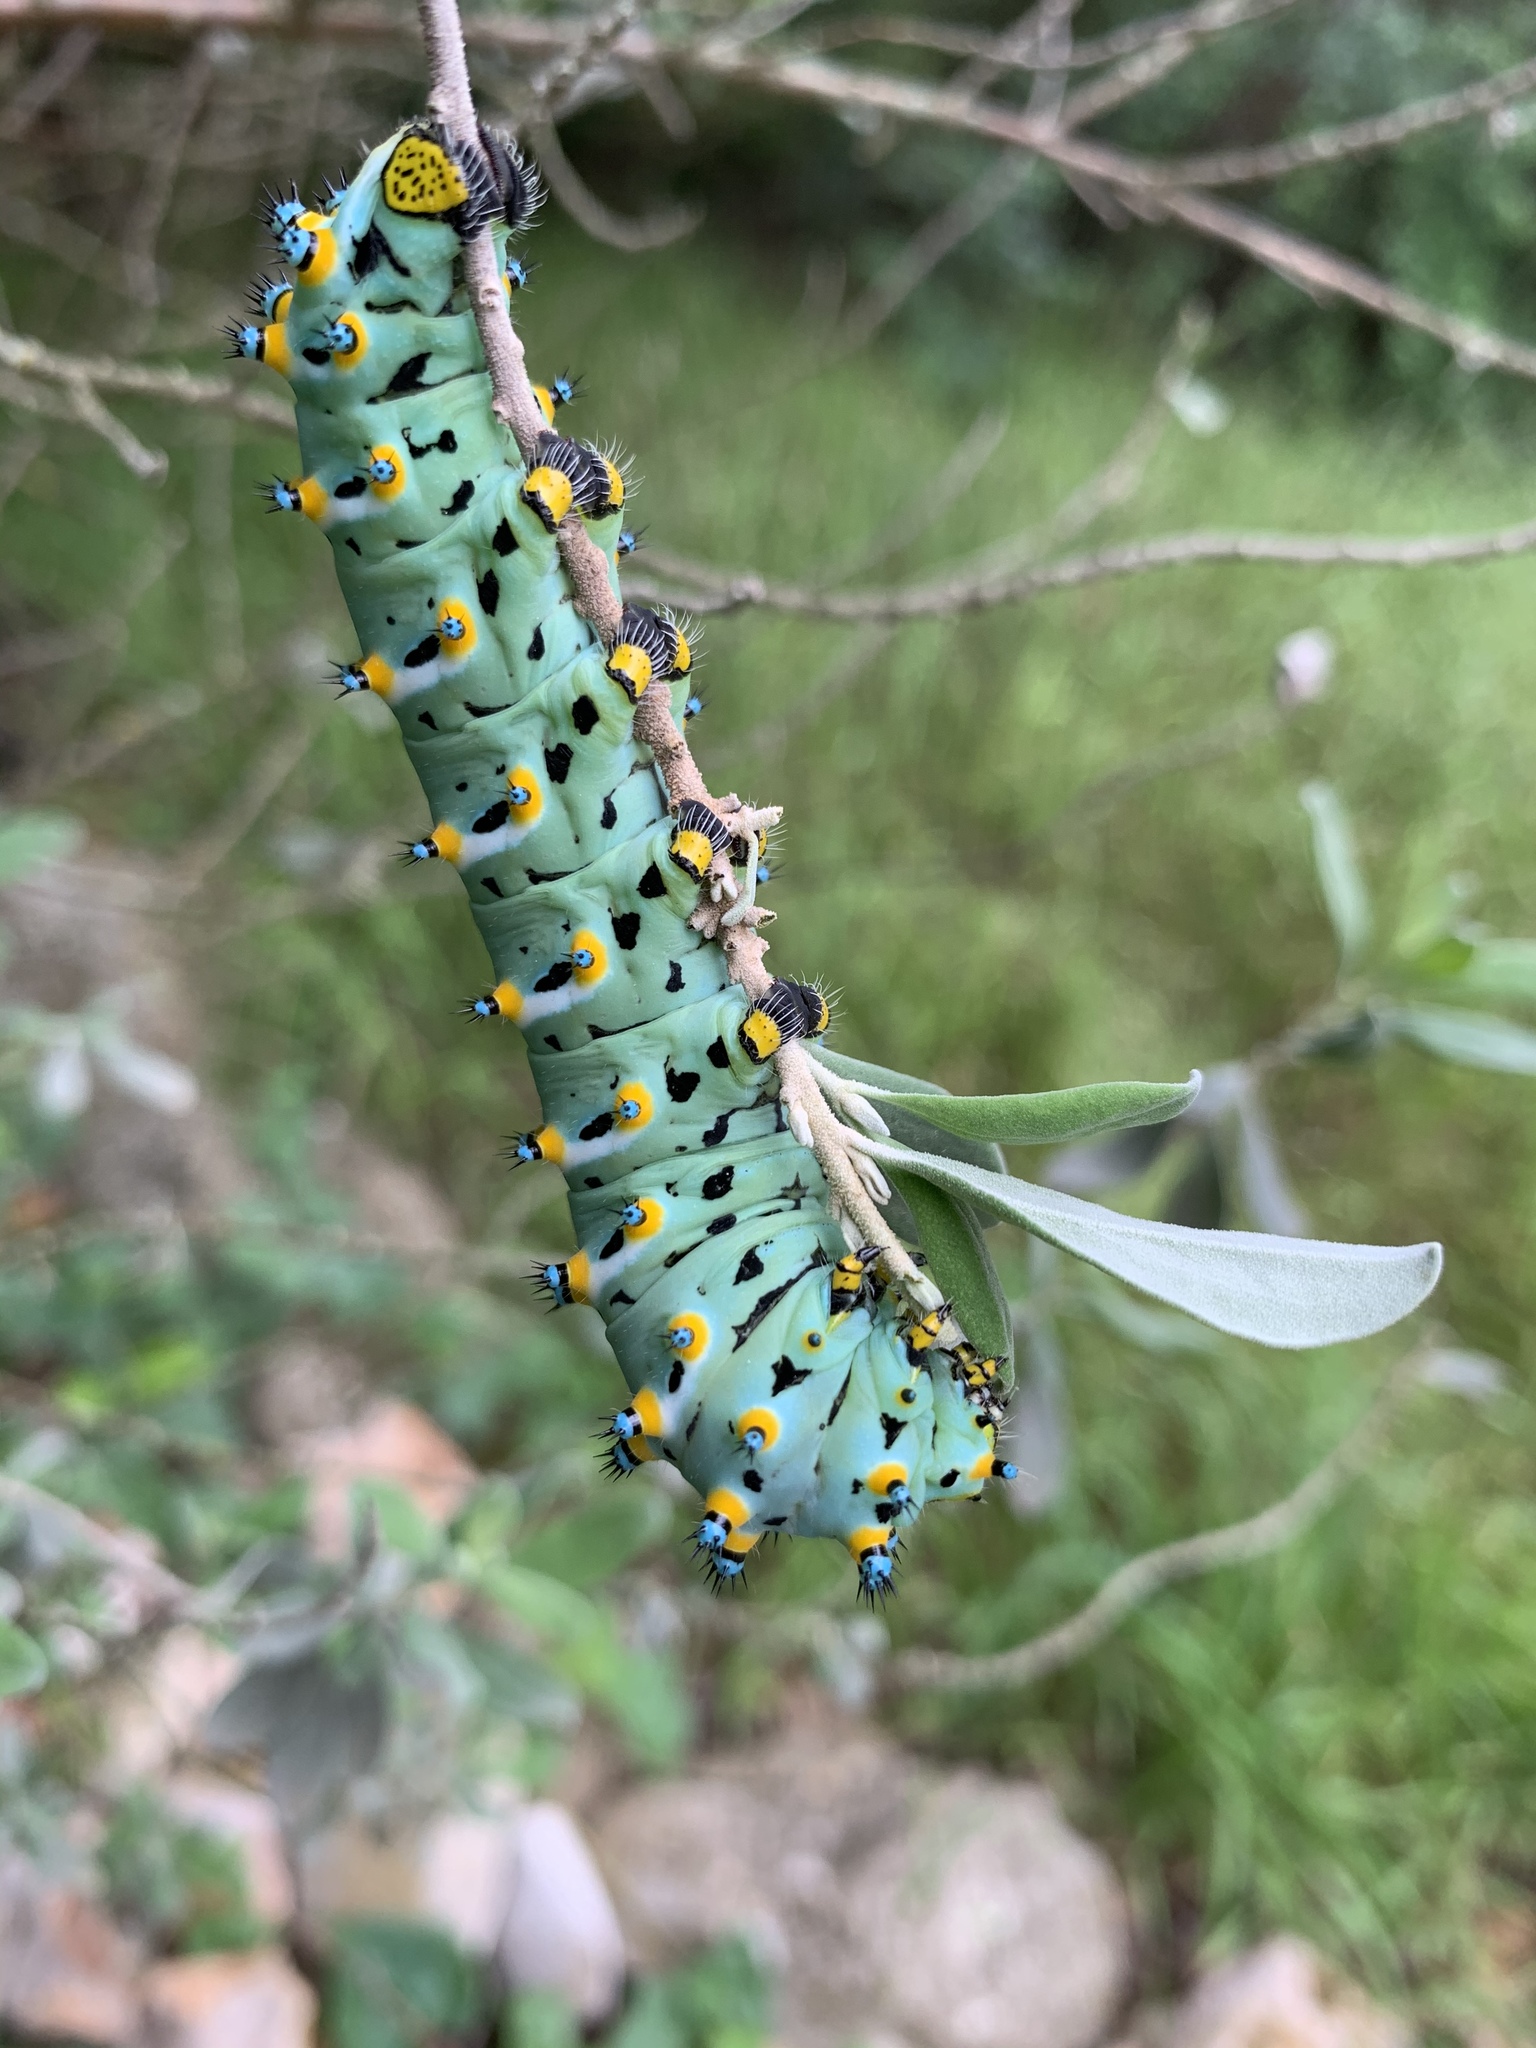 A caterpillar hangs on a tree branch